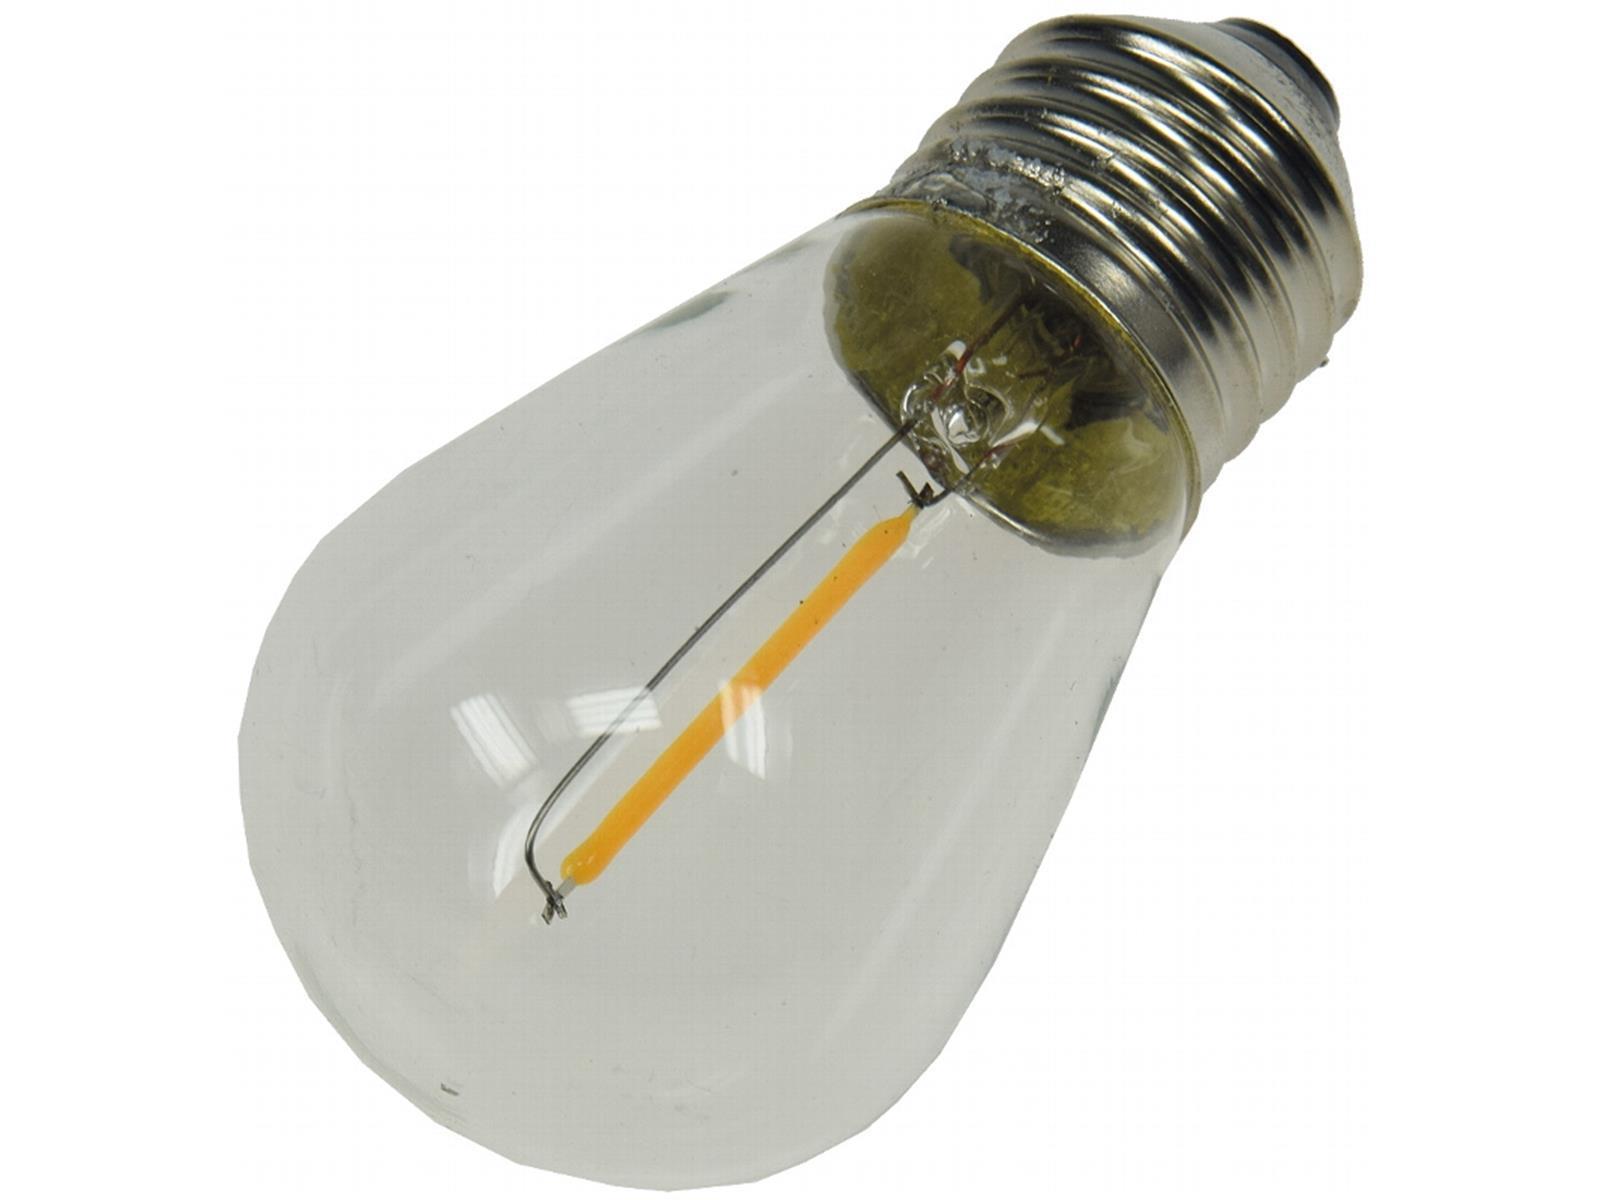 Biergarten-Lichterkette "CT-BGL 15"1,5 + 12,5m, 15x Filamentlampe 0,8W